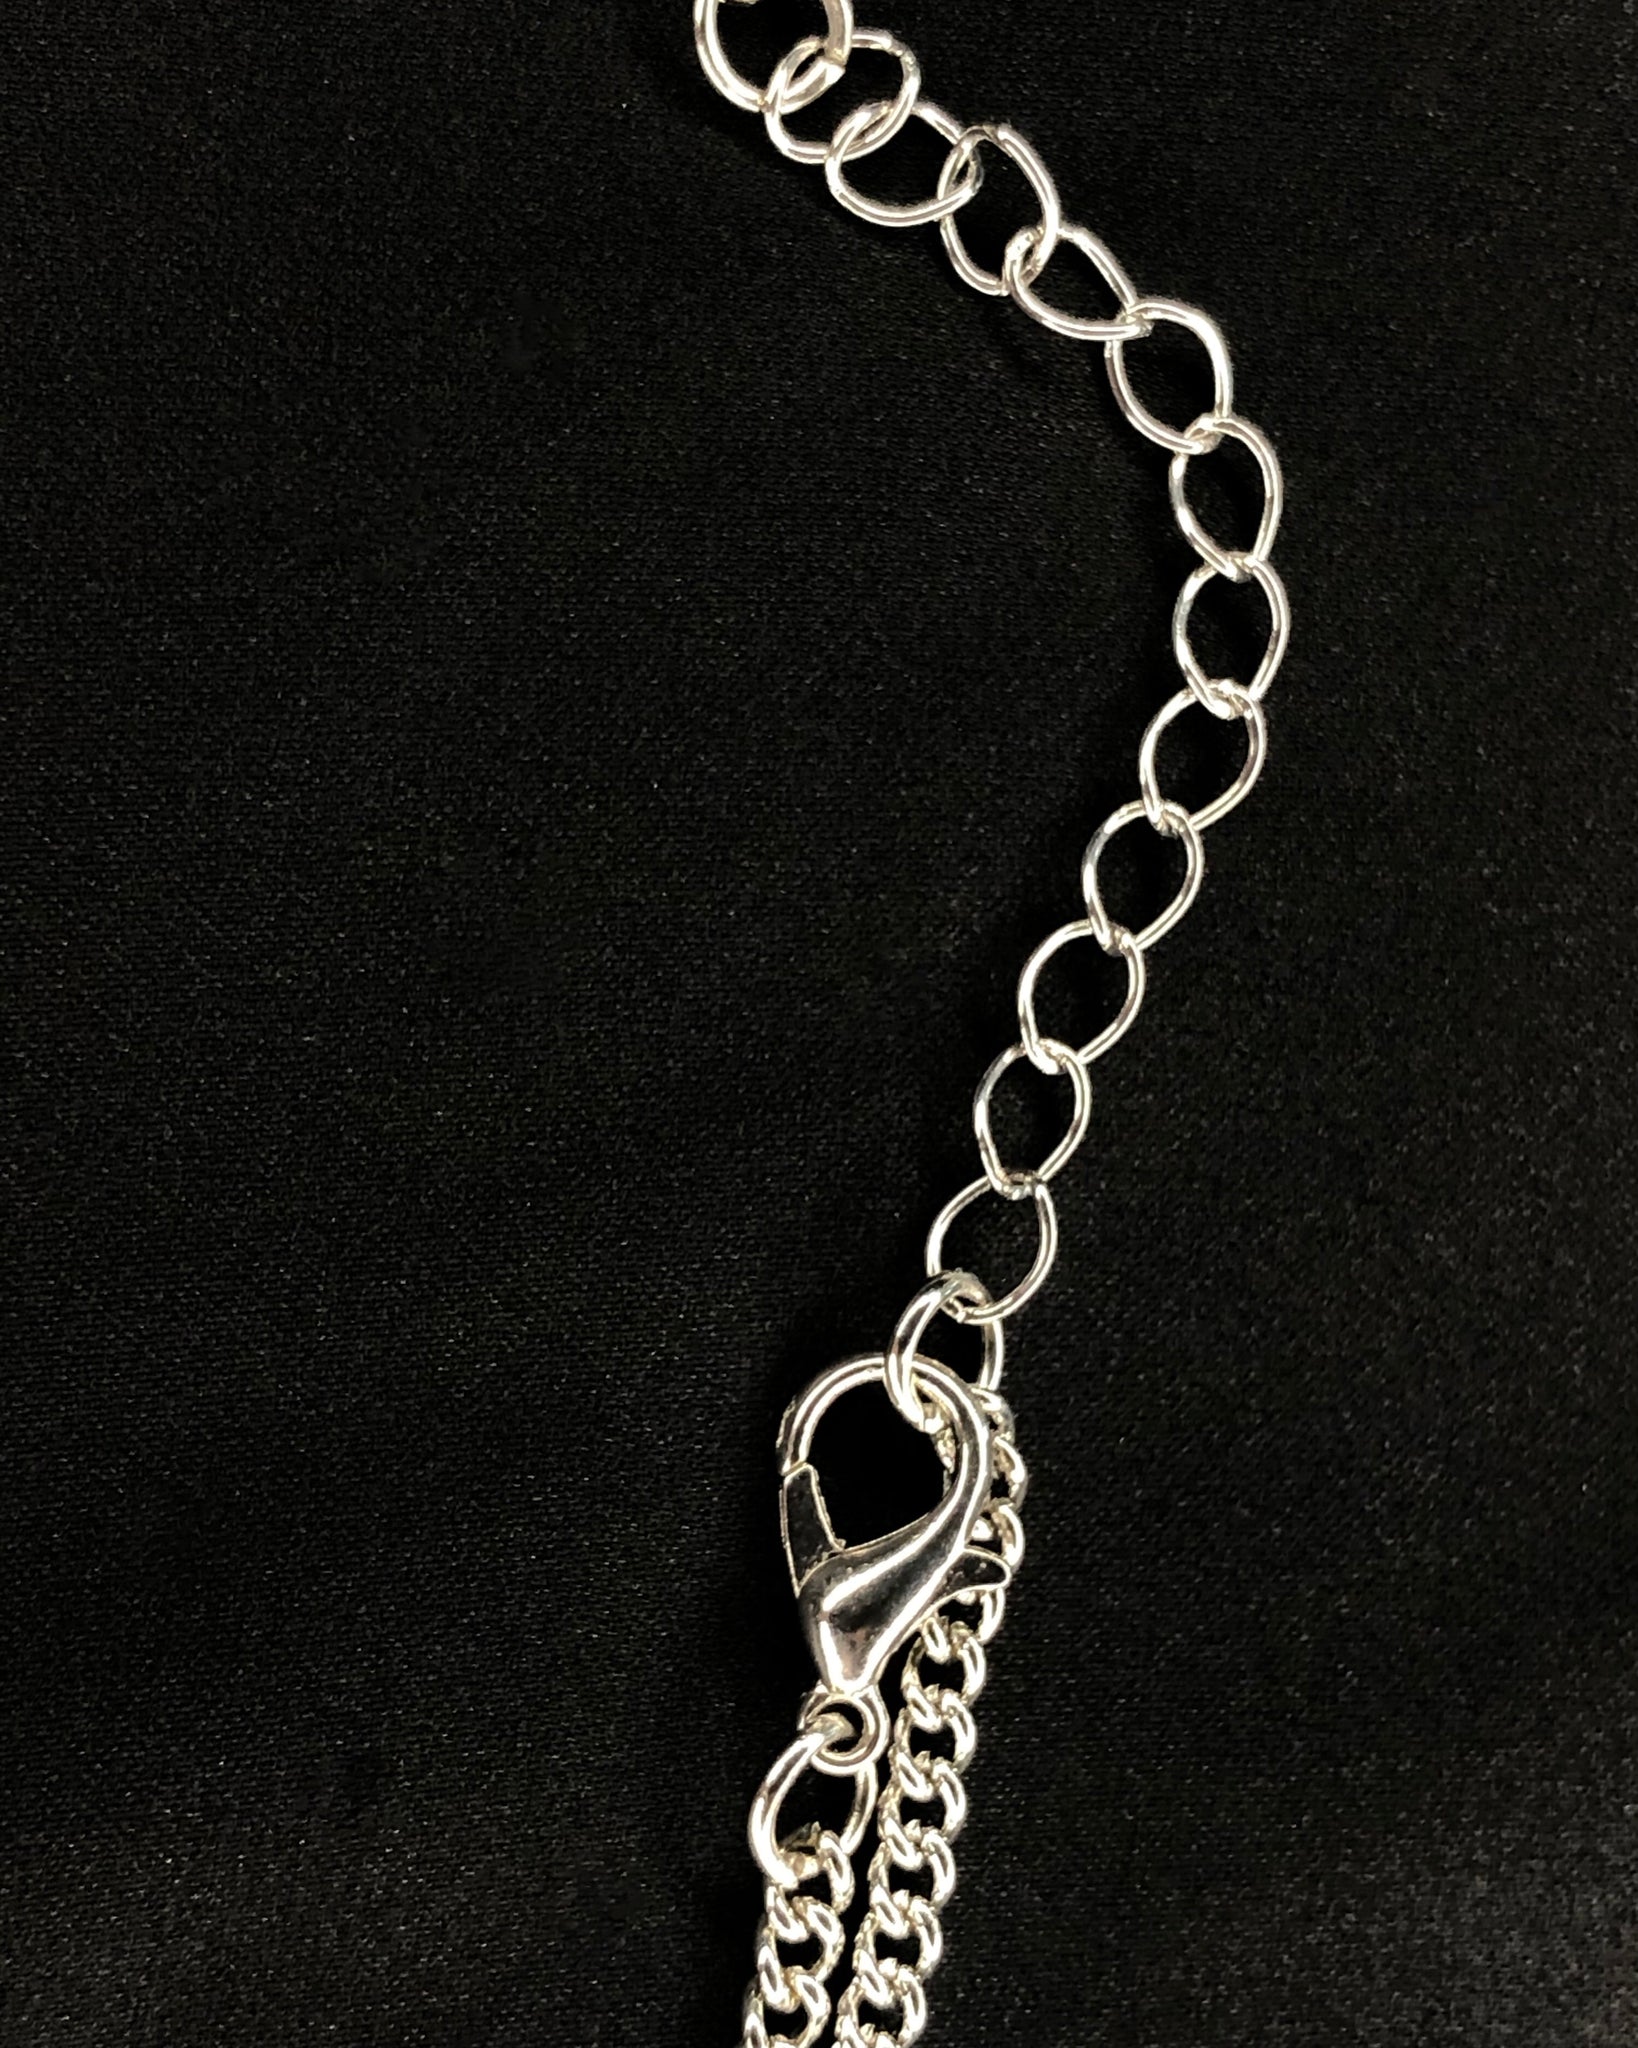 Crown Chakra Locket Necklace